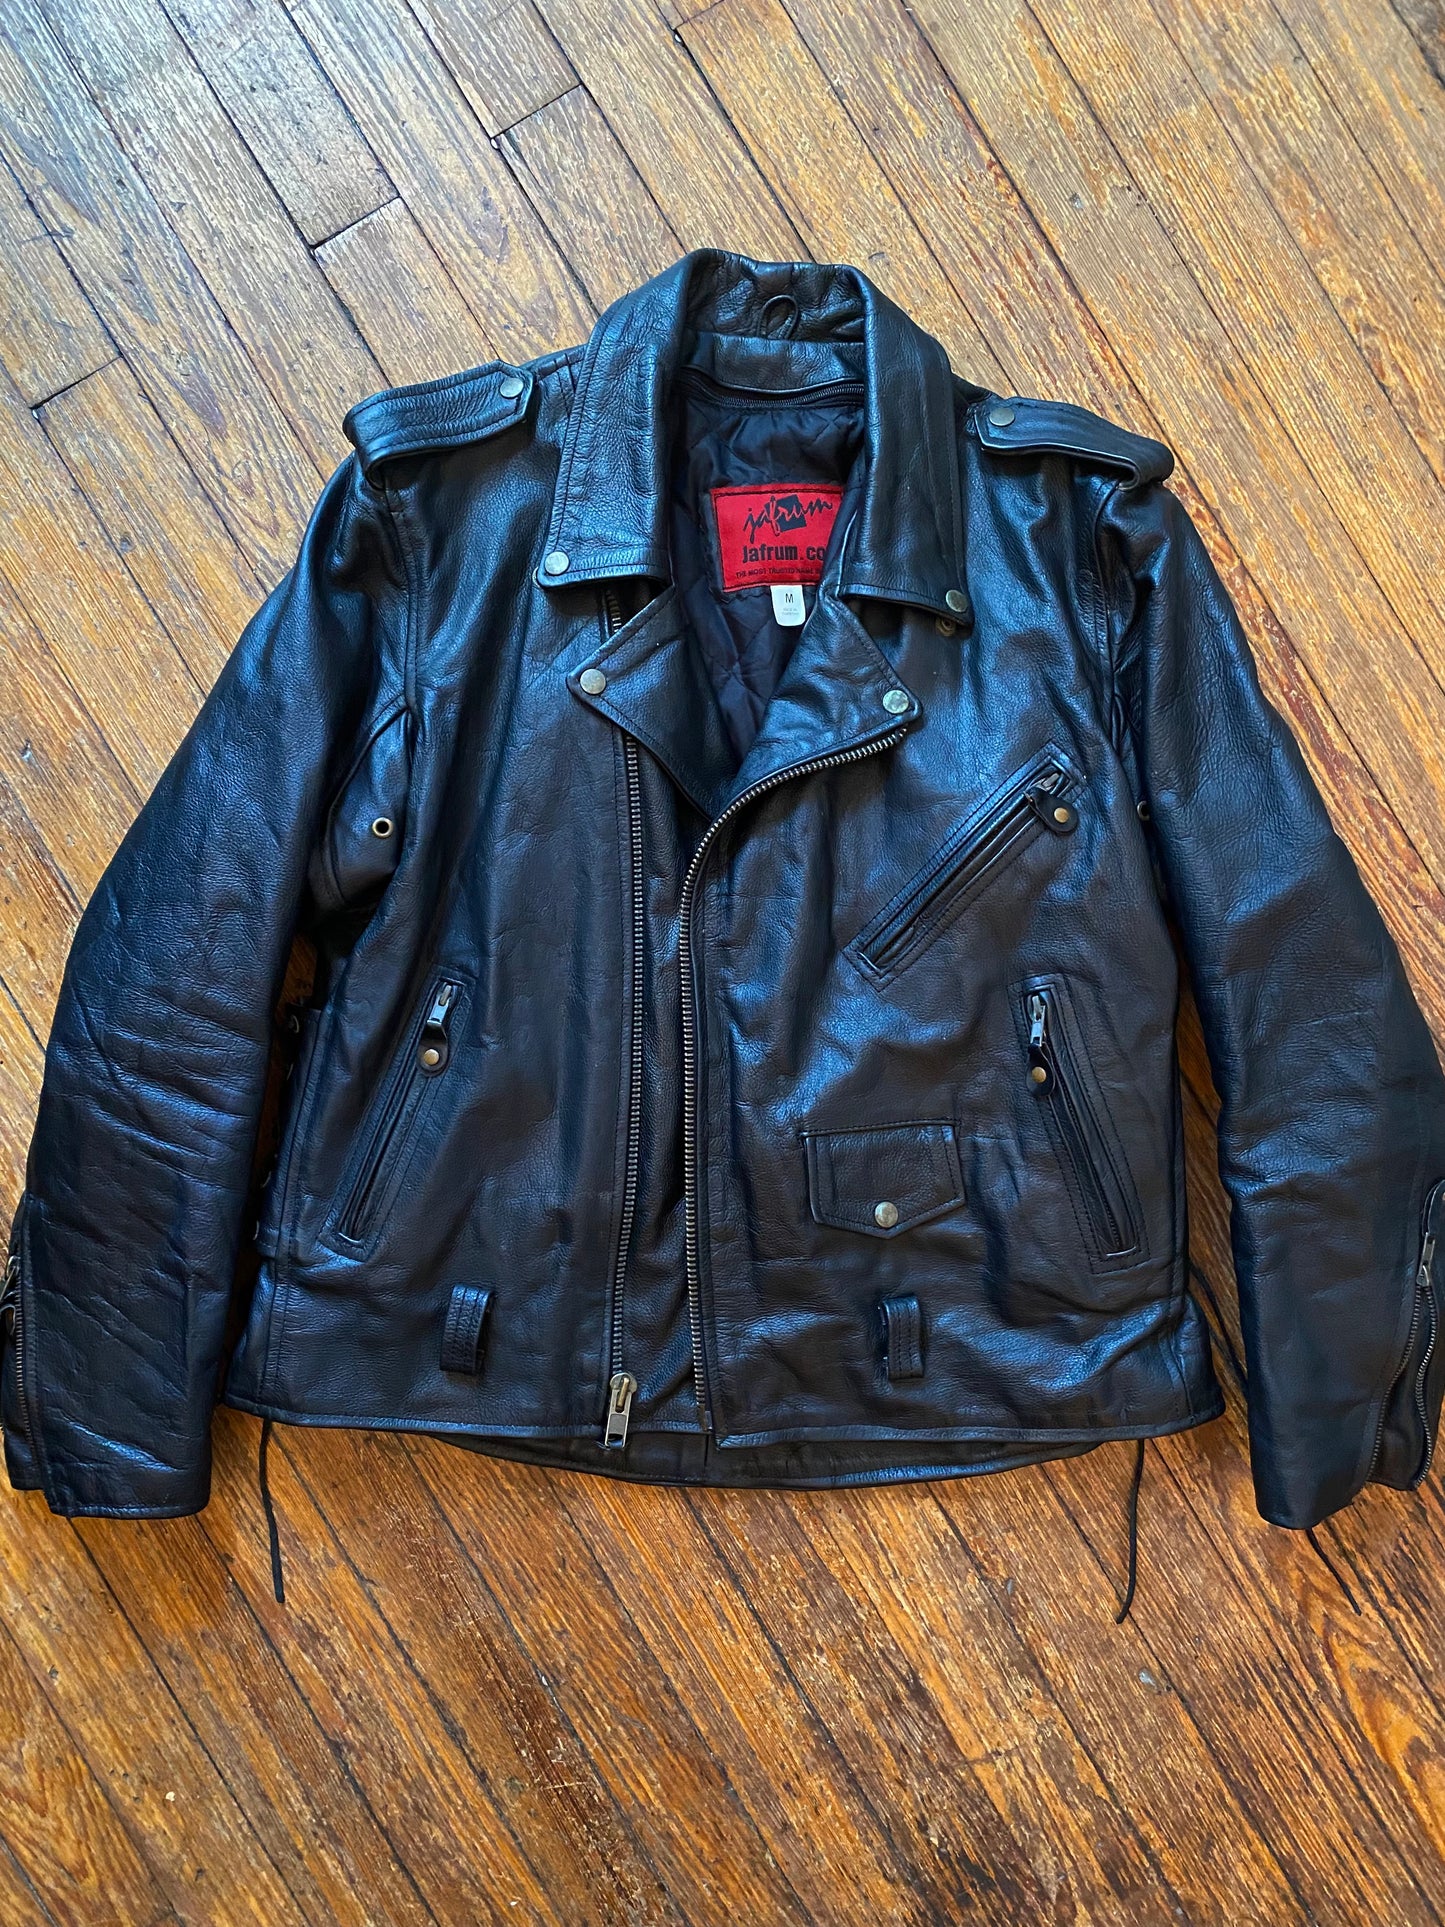 Vintage Jafrum Leather Motorcycle Jacket w/ Removable Lining